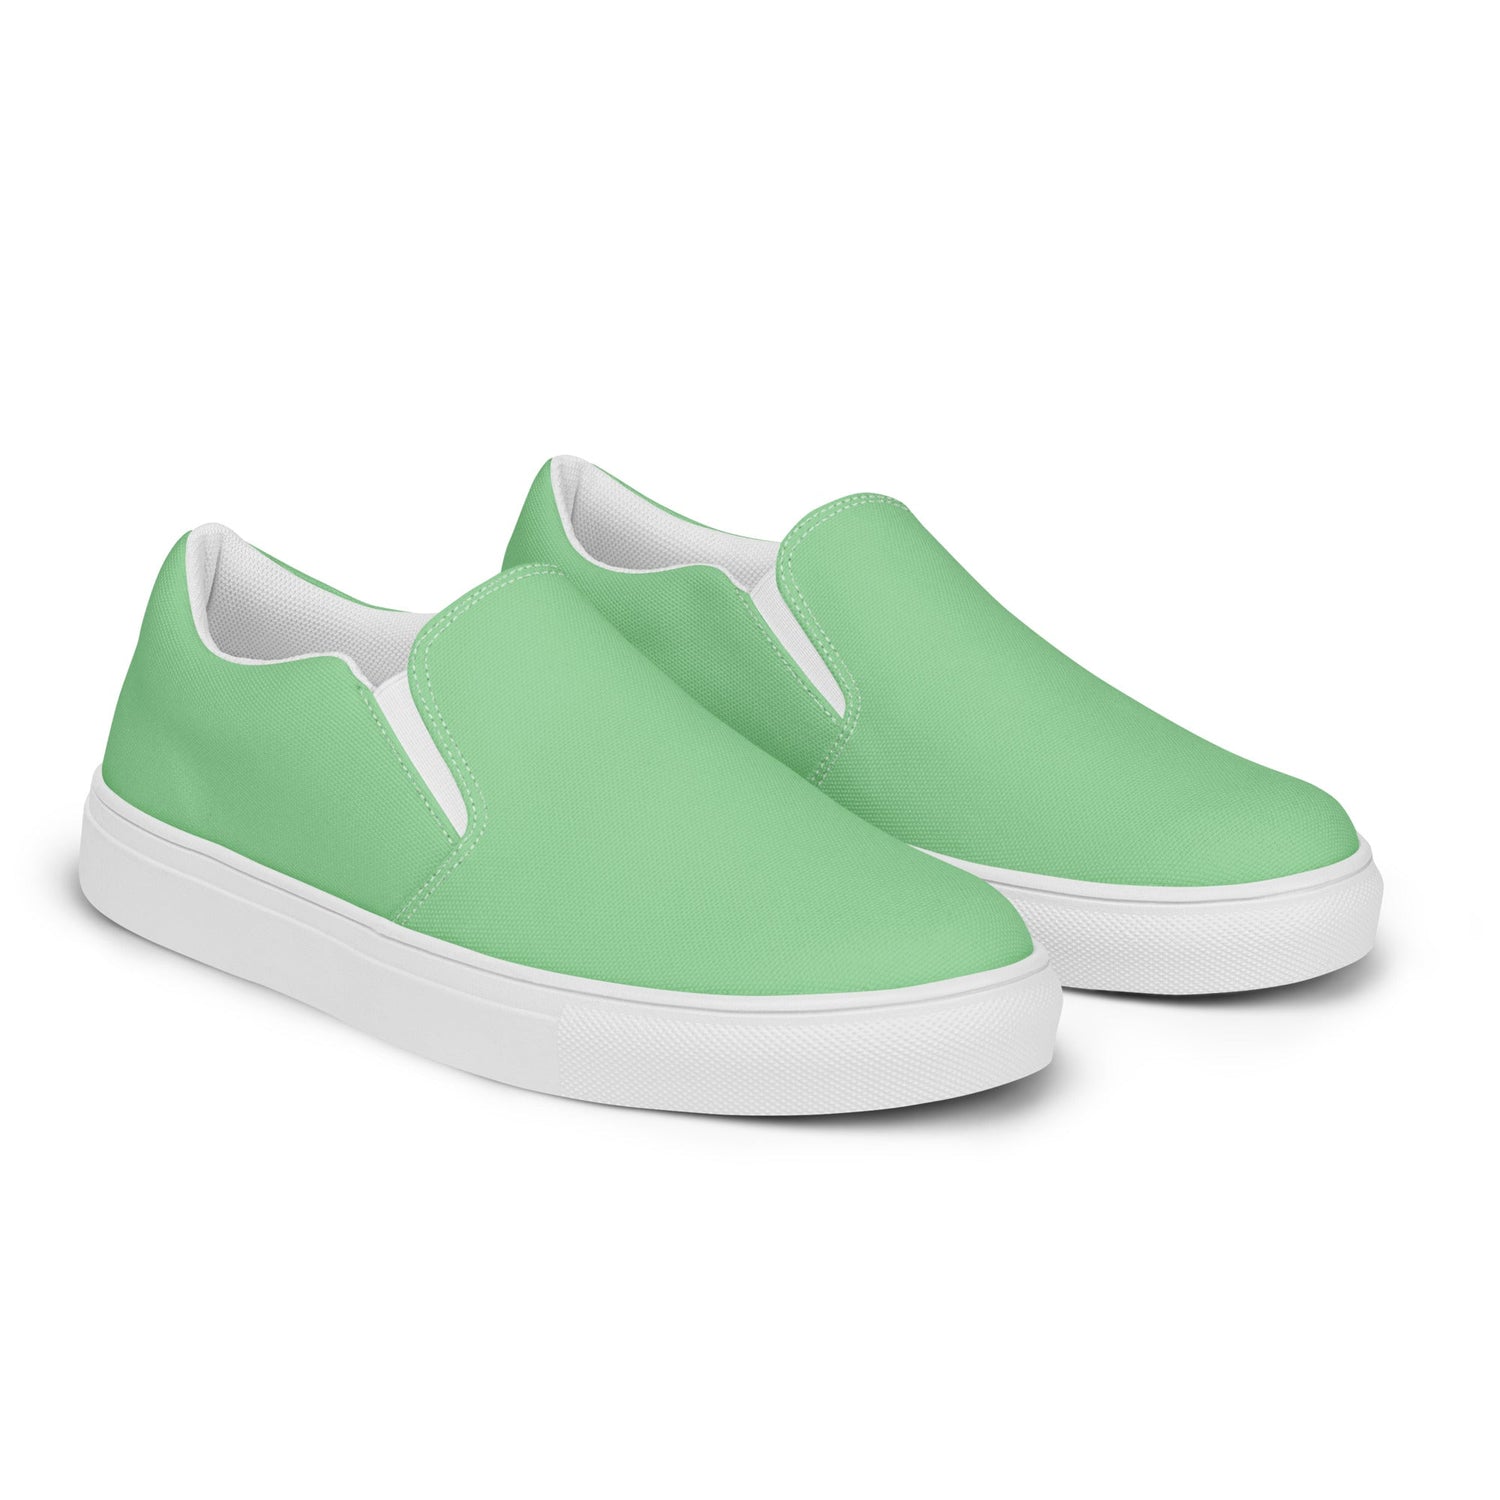 klasneakers Women’s slip-on canvas shoes - Mint